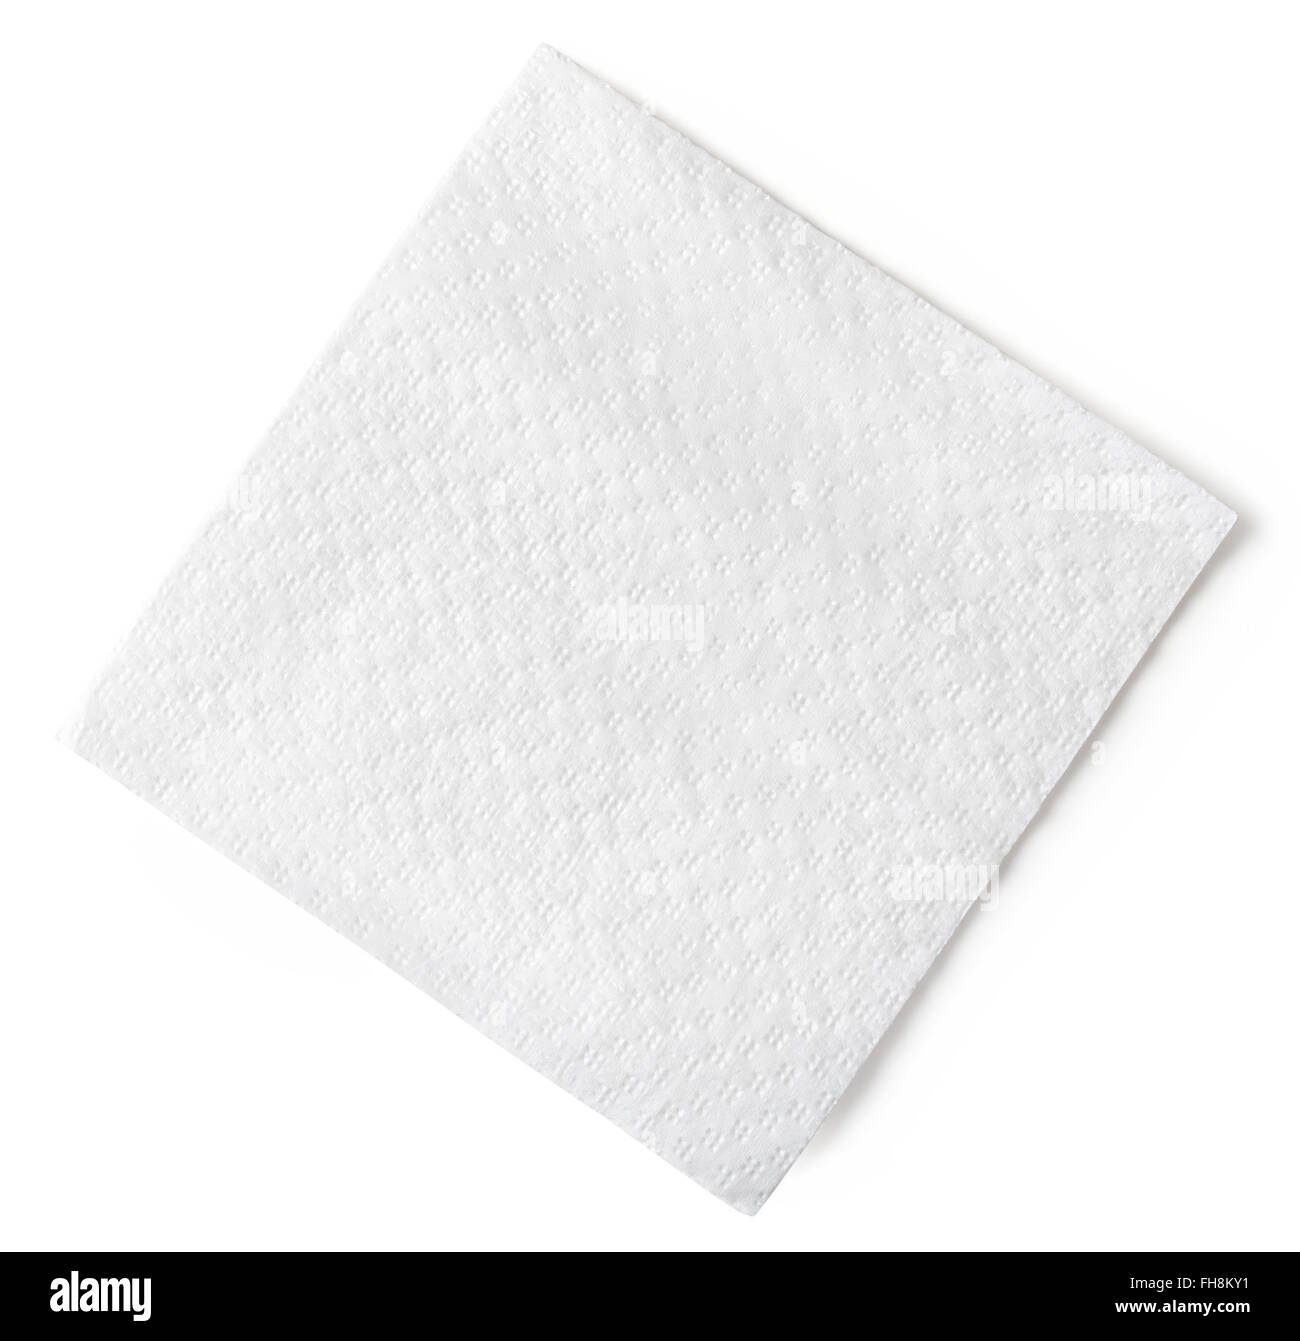 Paper napkin isolated on white background Stock Photo